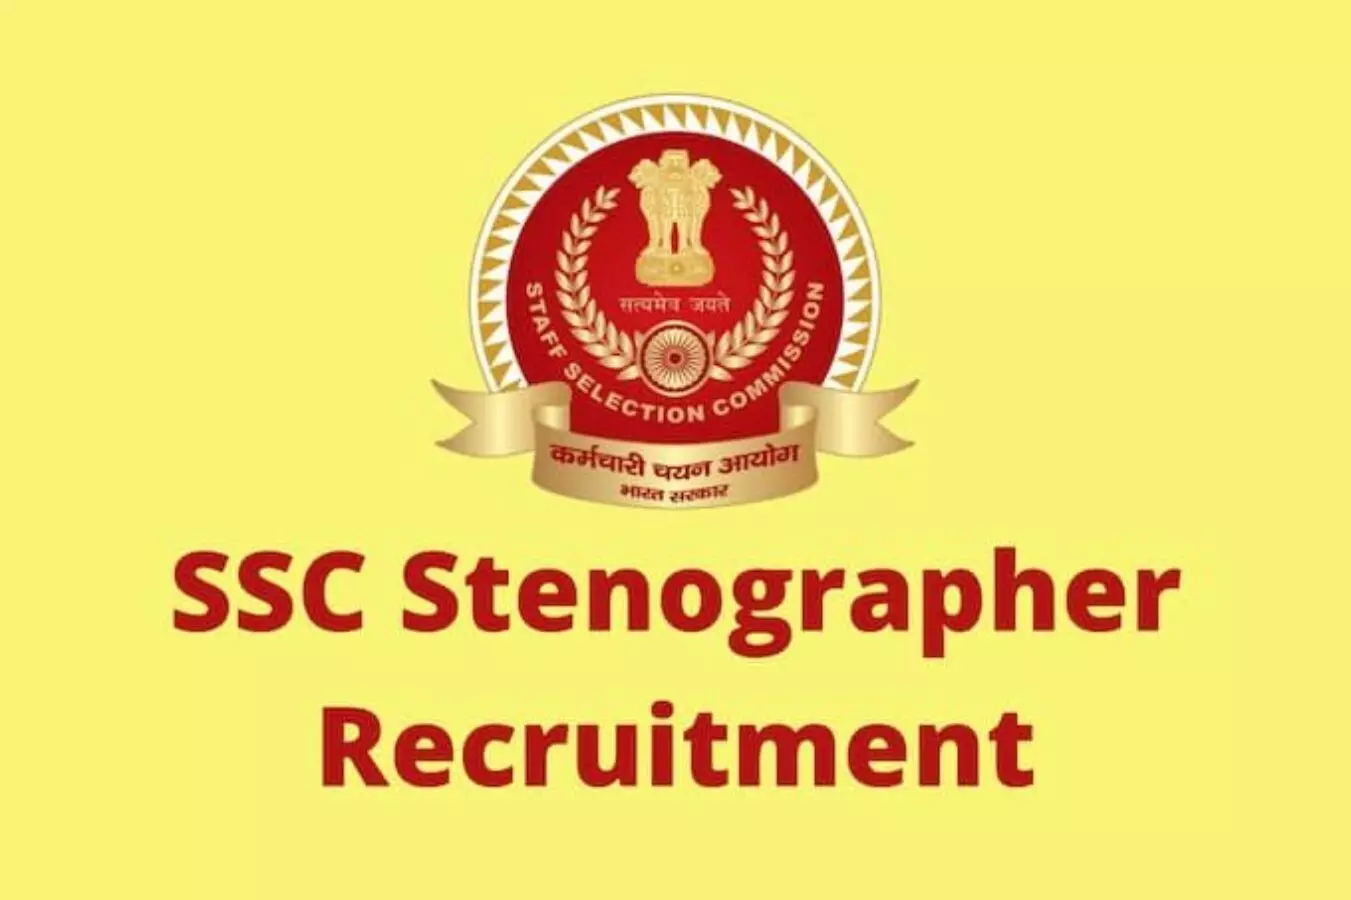 ssc stenographer recruitment 2022 know education qualification selection process age limit